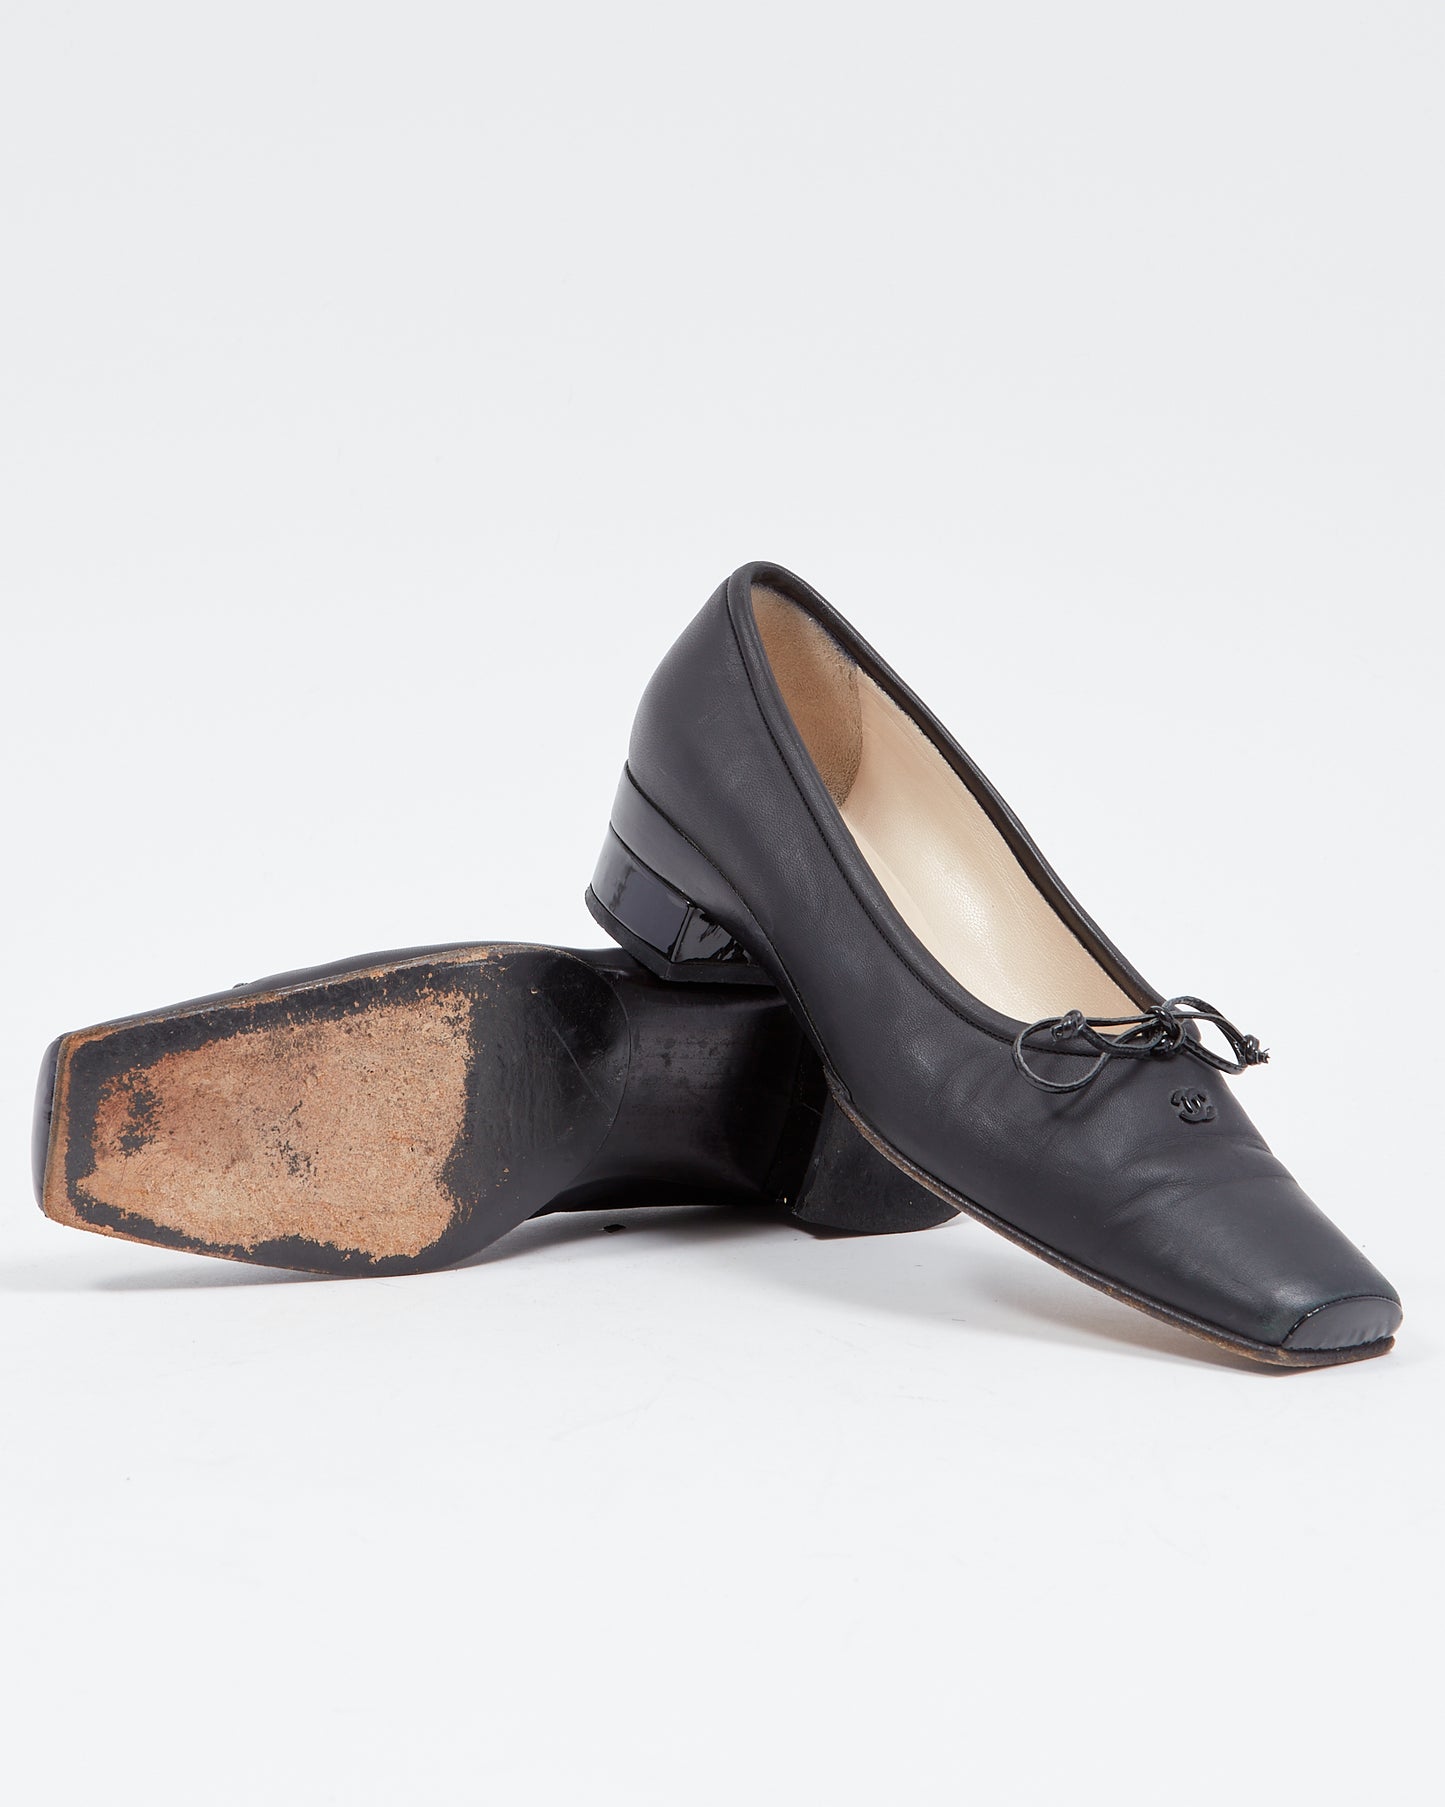 Chanel Vintage Black Leather Square Toe Block Heel Pumps - 38.5